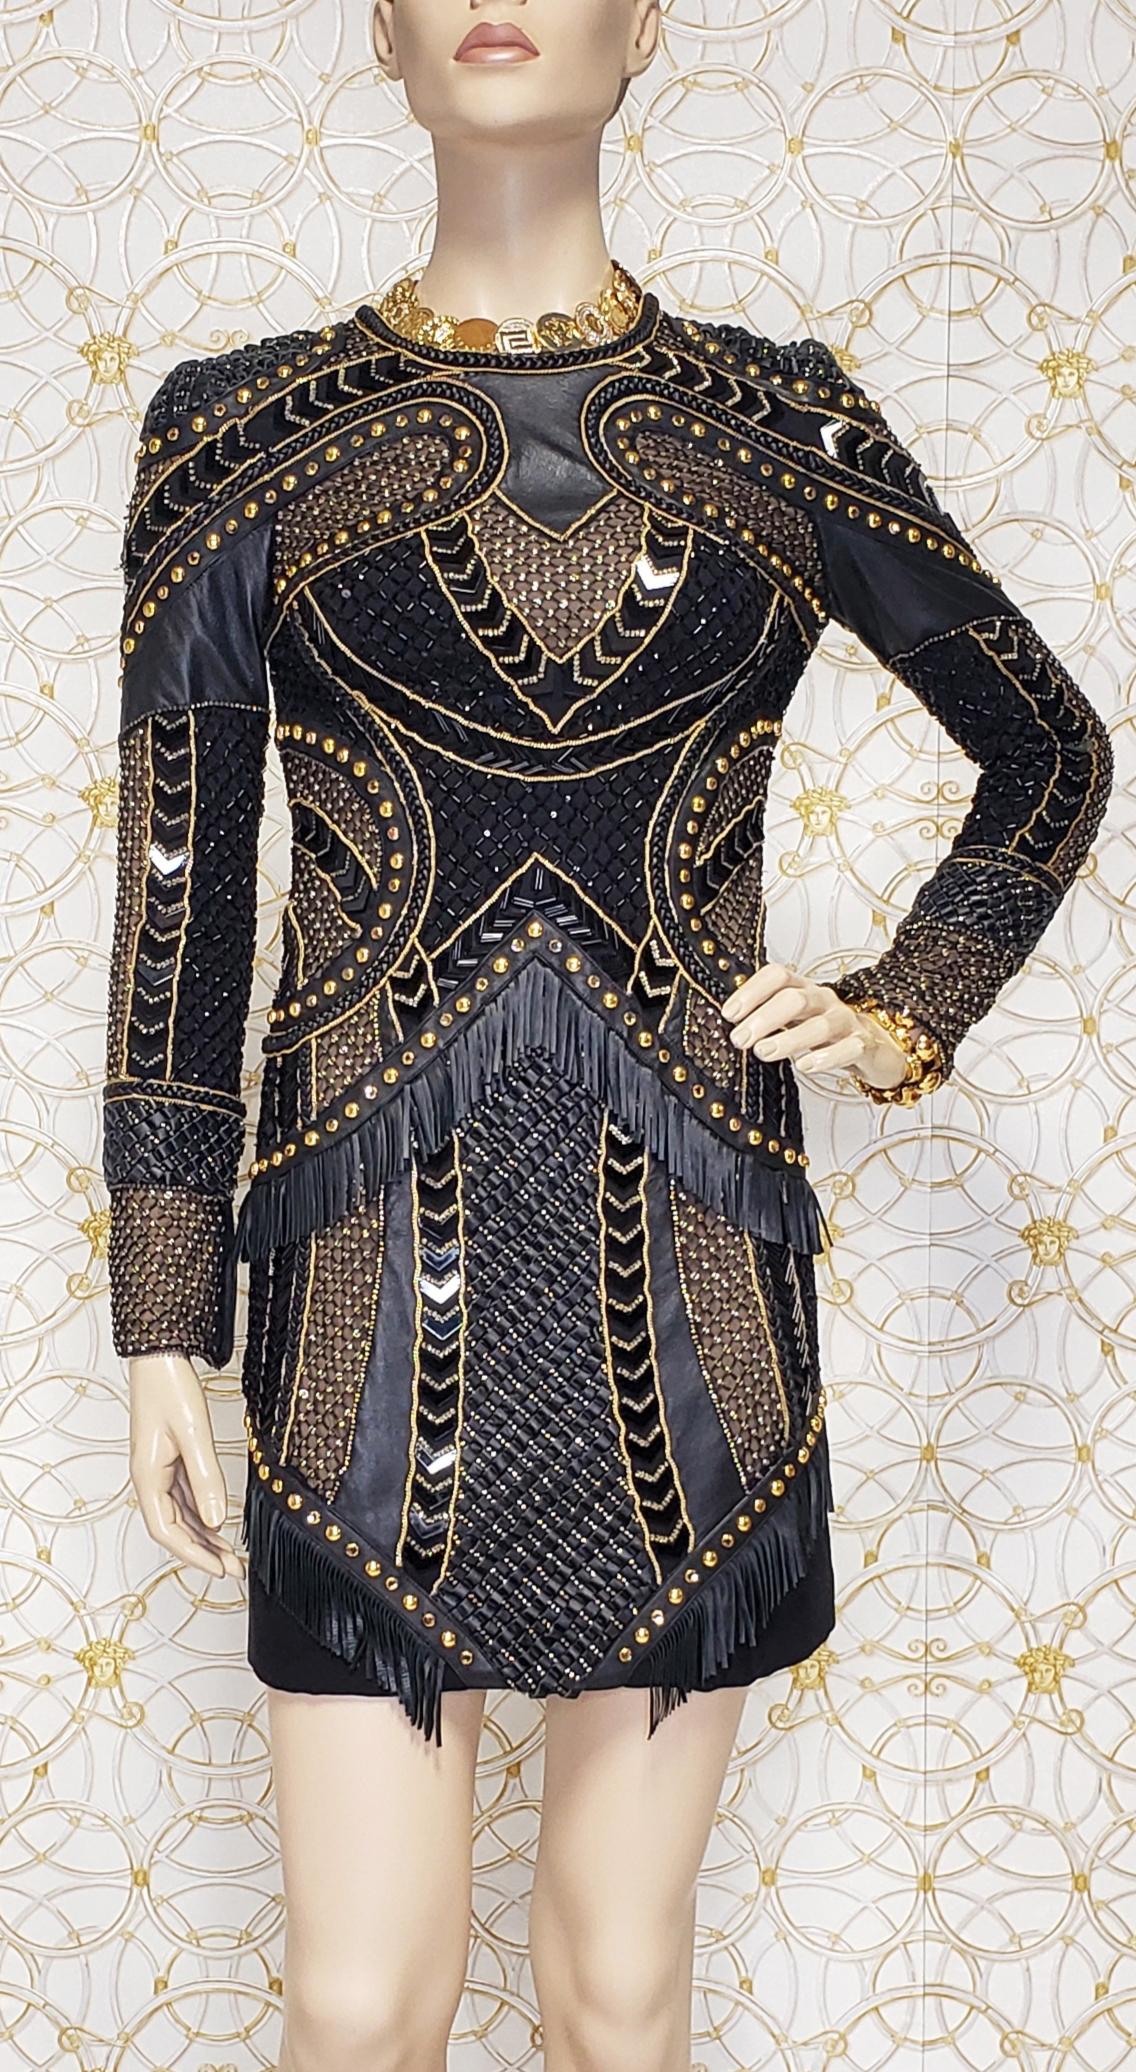 New Versace Crystal and Stud Embellished Leather Dress w/ Fringe 2